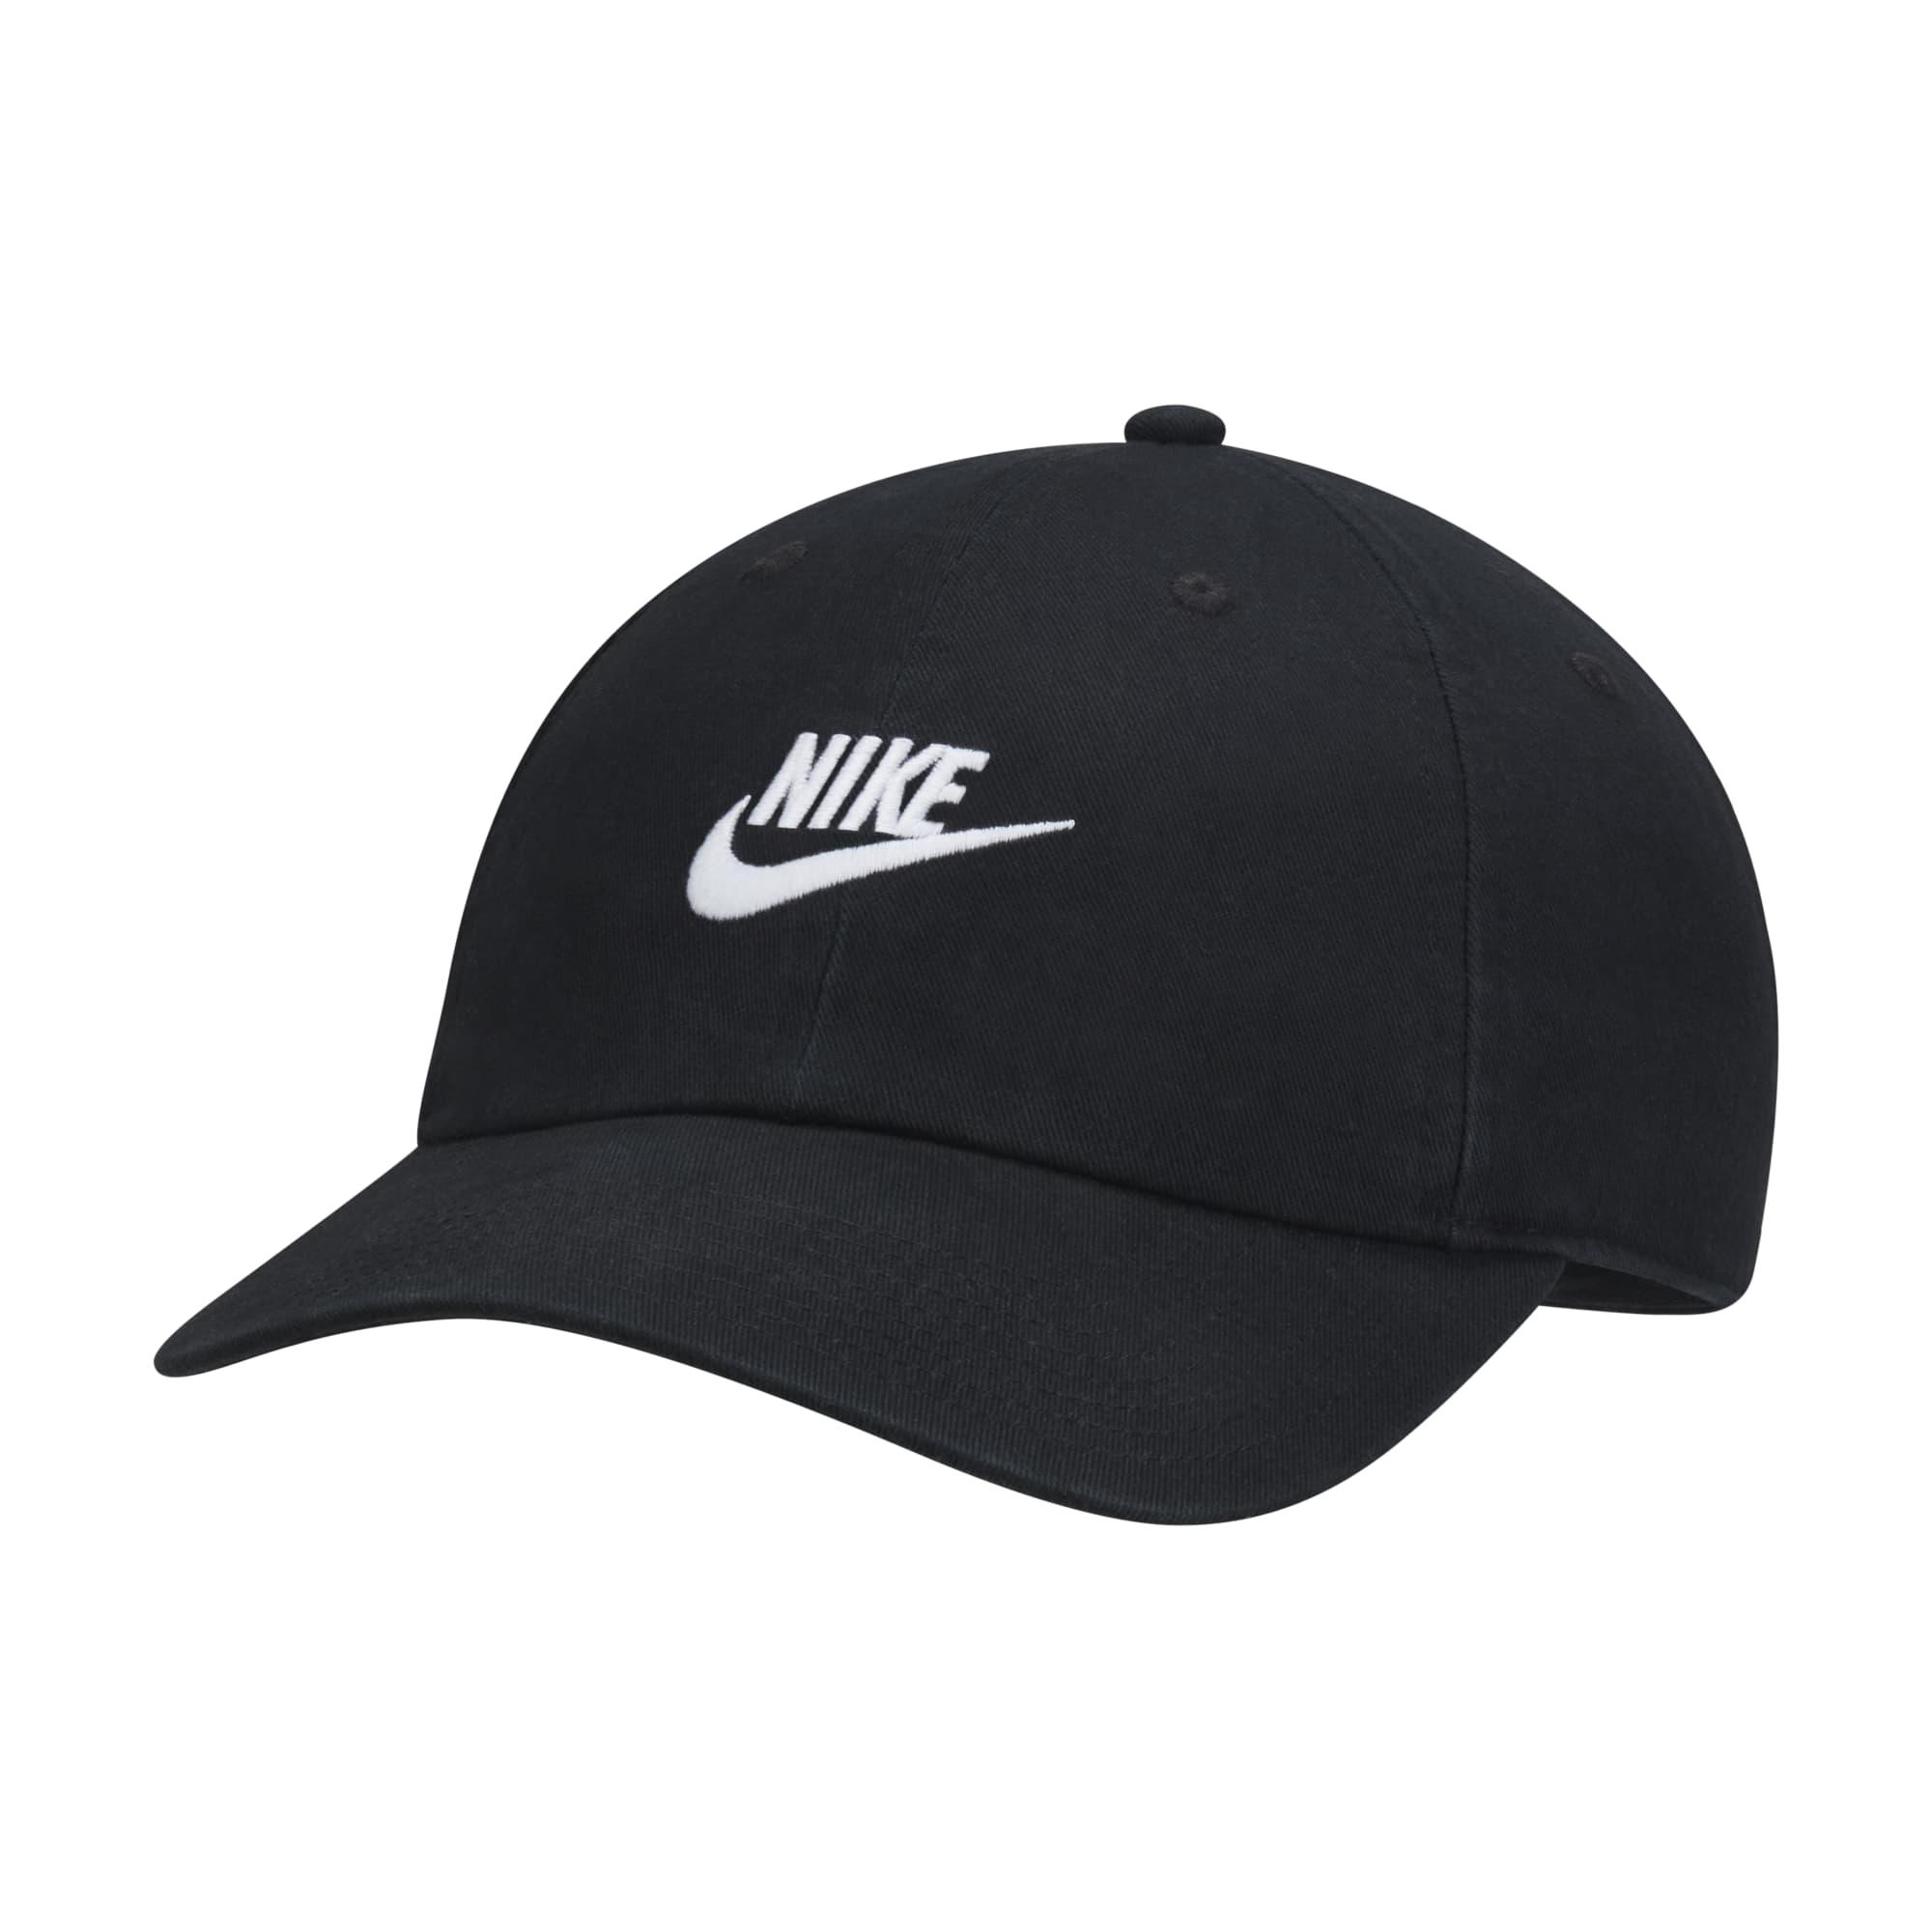 Nike Sportswear Heritage86 Futura Washed Hat in Black,Black,White (Black)  for Men - Save 42% | Lyst